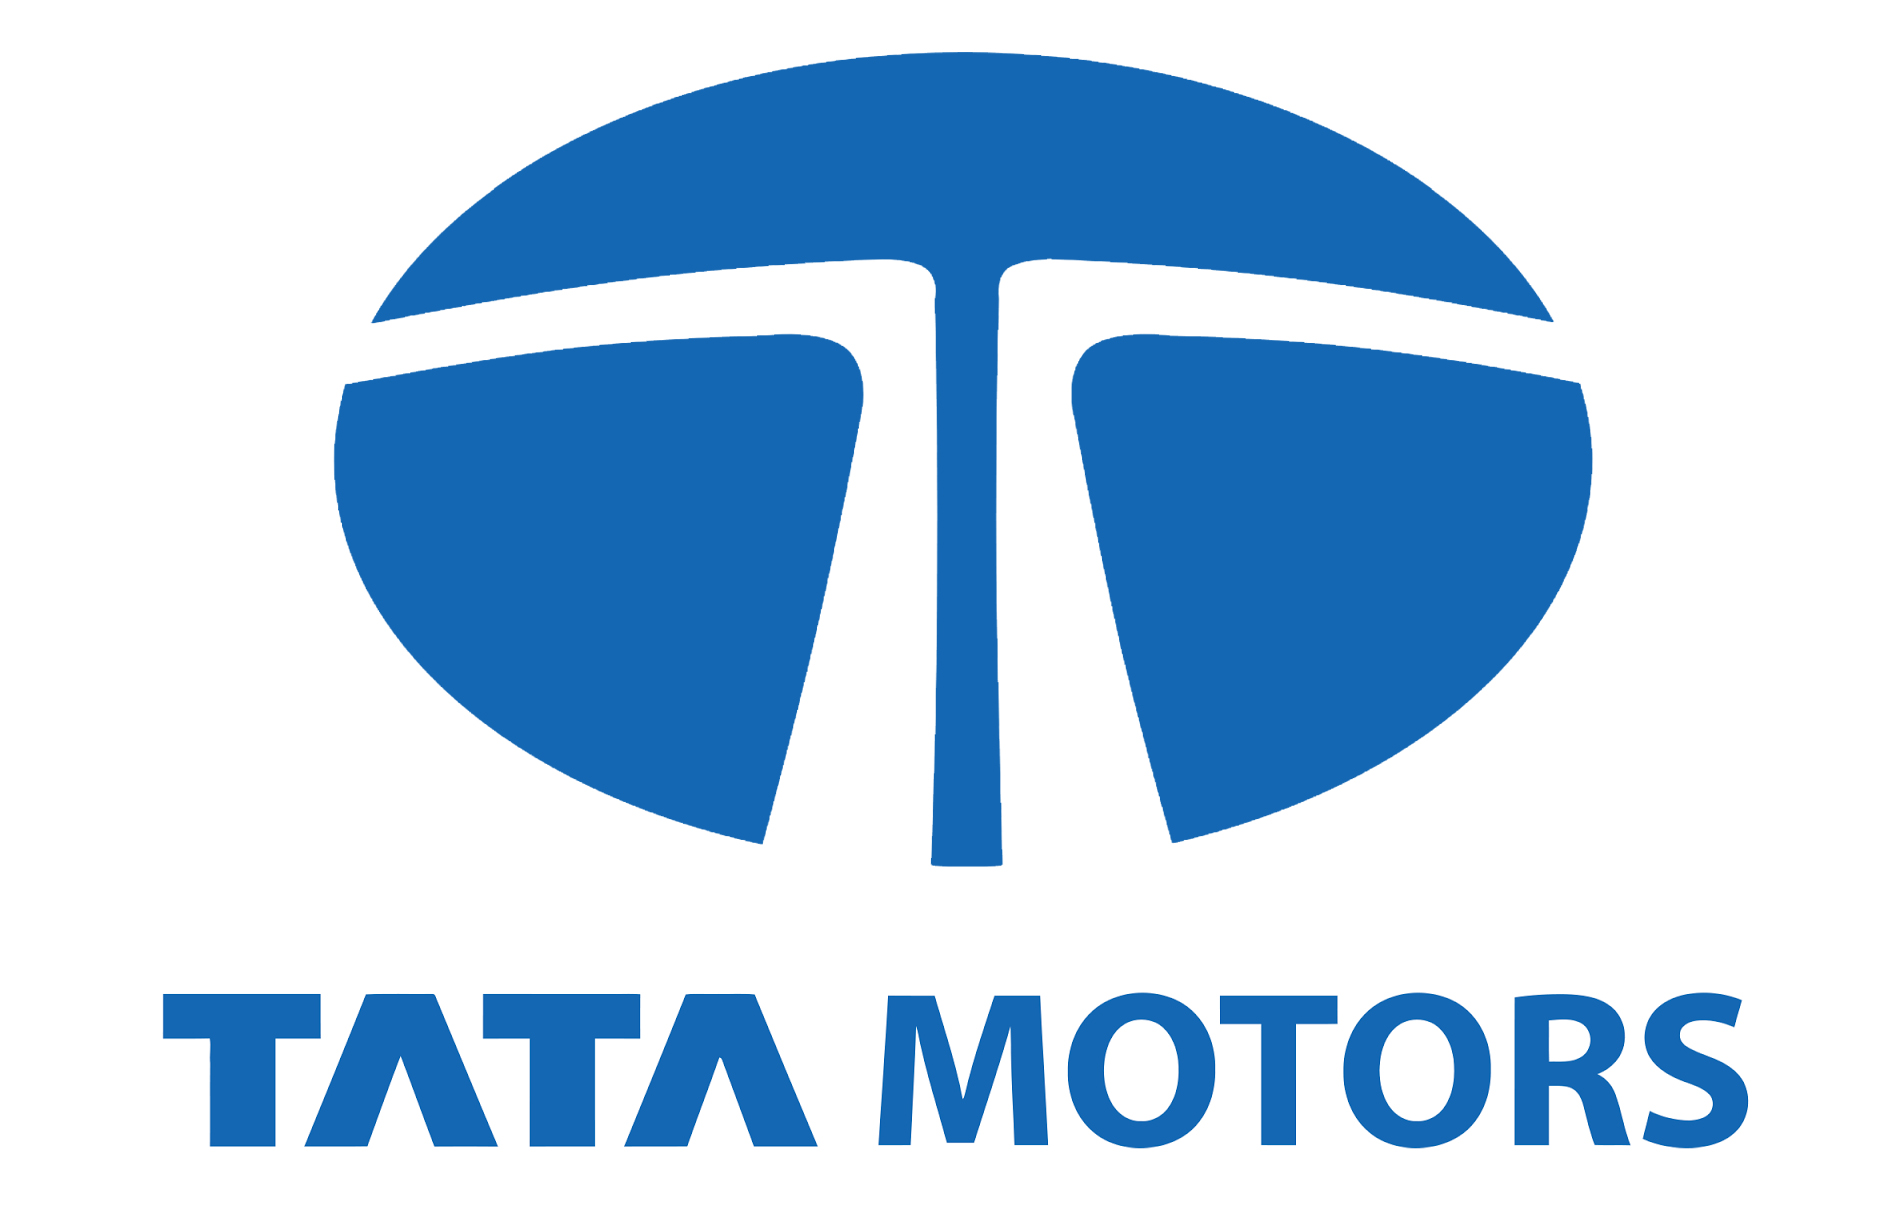 Tata Motors Cars Showroom - Falcon Motors - Logo